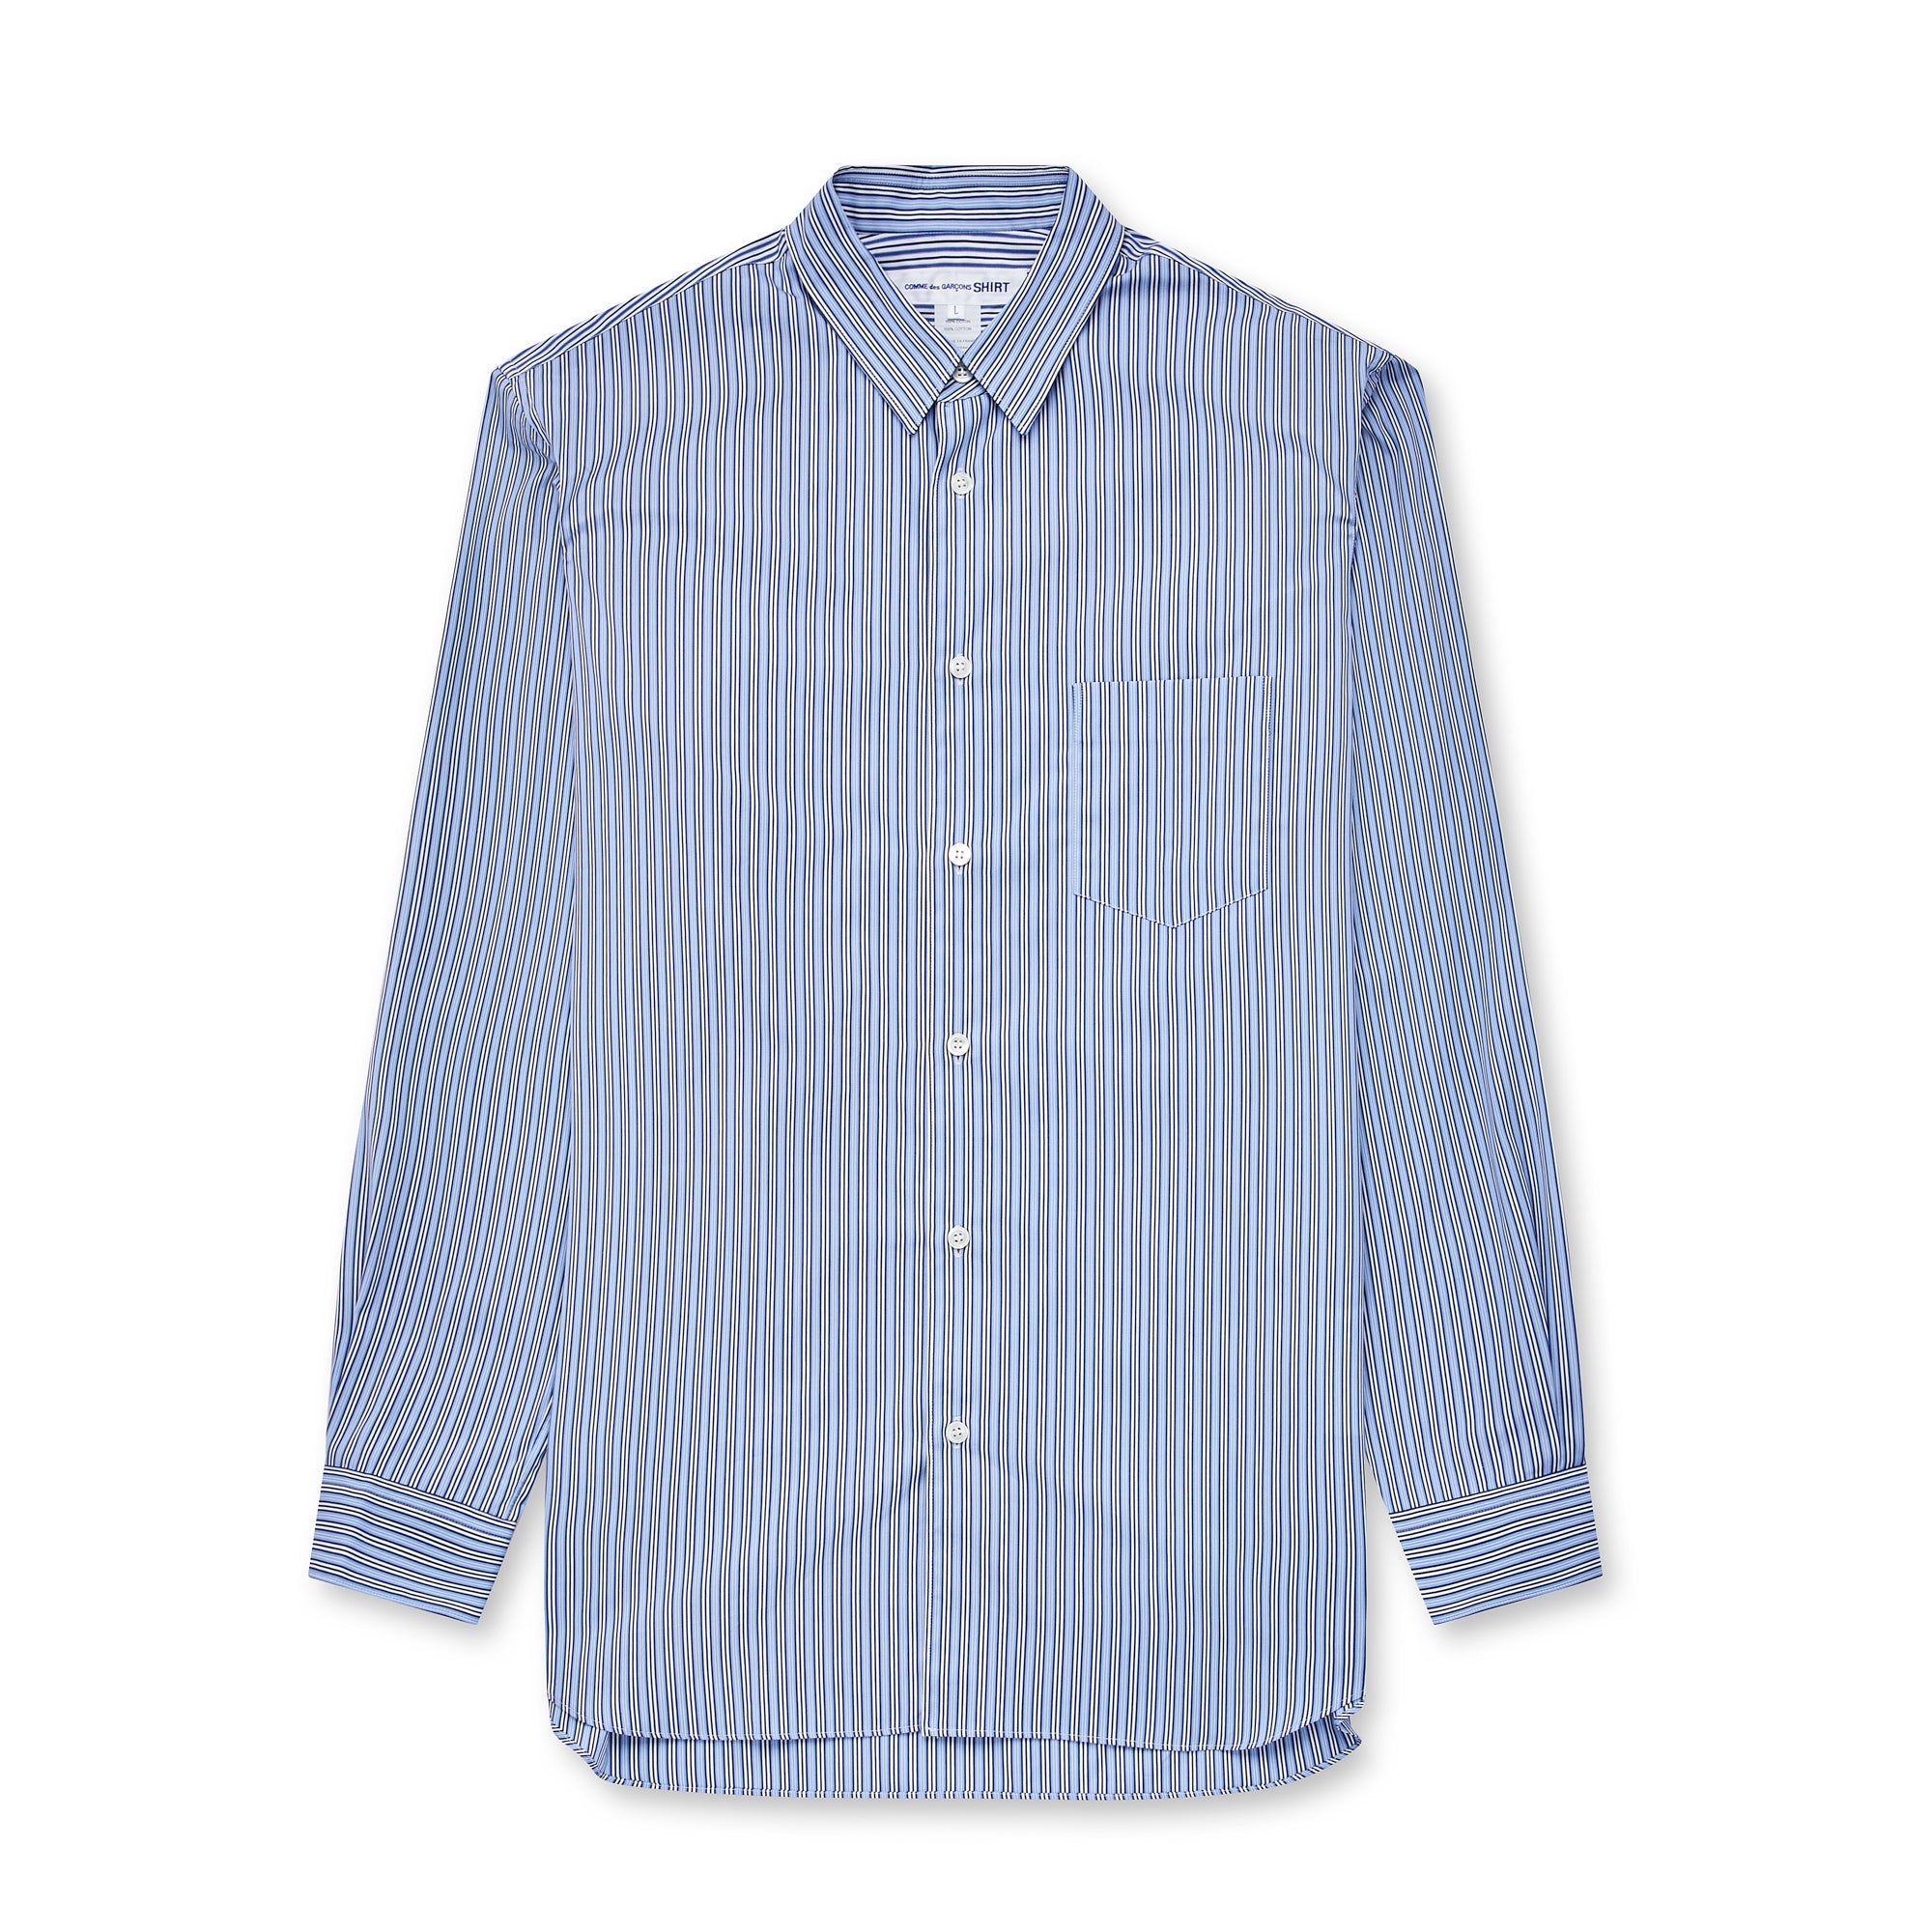 CDG Shirt Forever - Classic Fit Striped Poplin Shirt - (Stripe 1) view 1